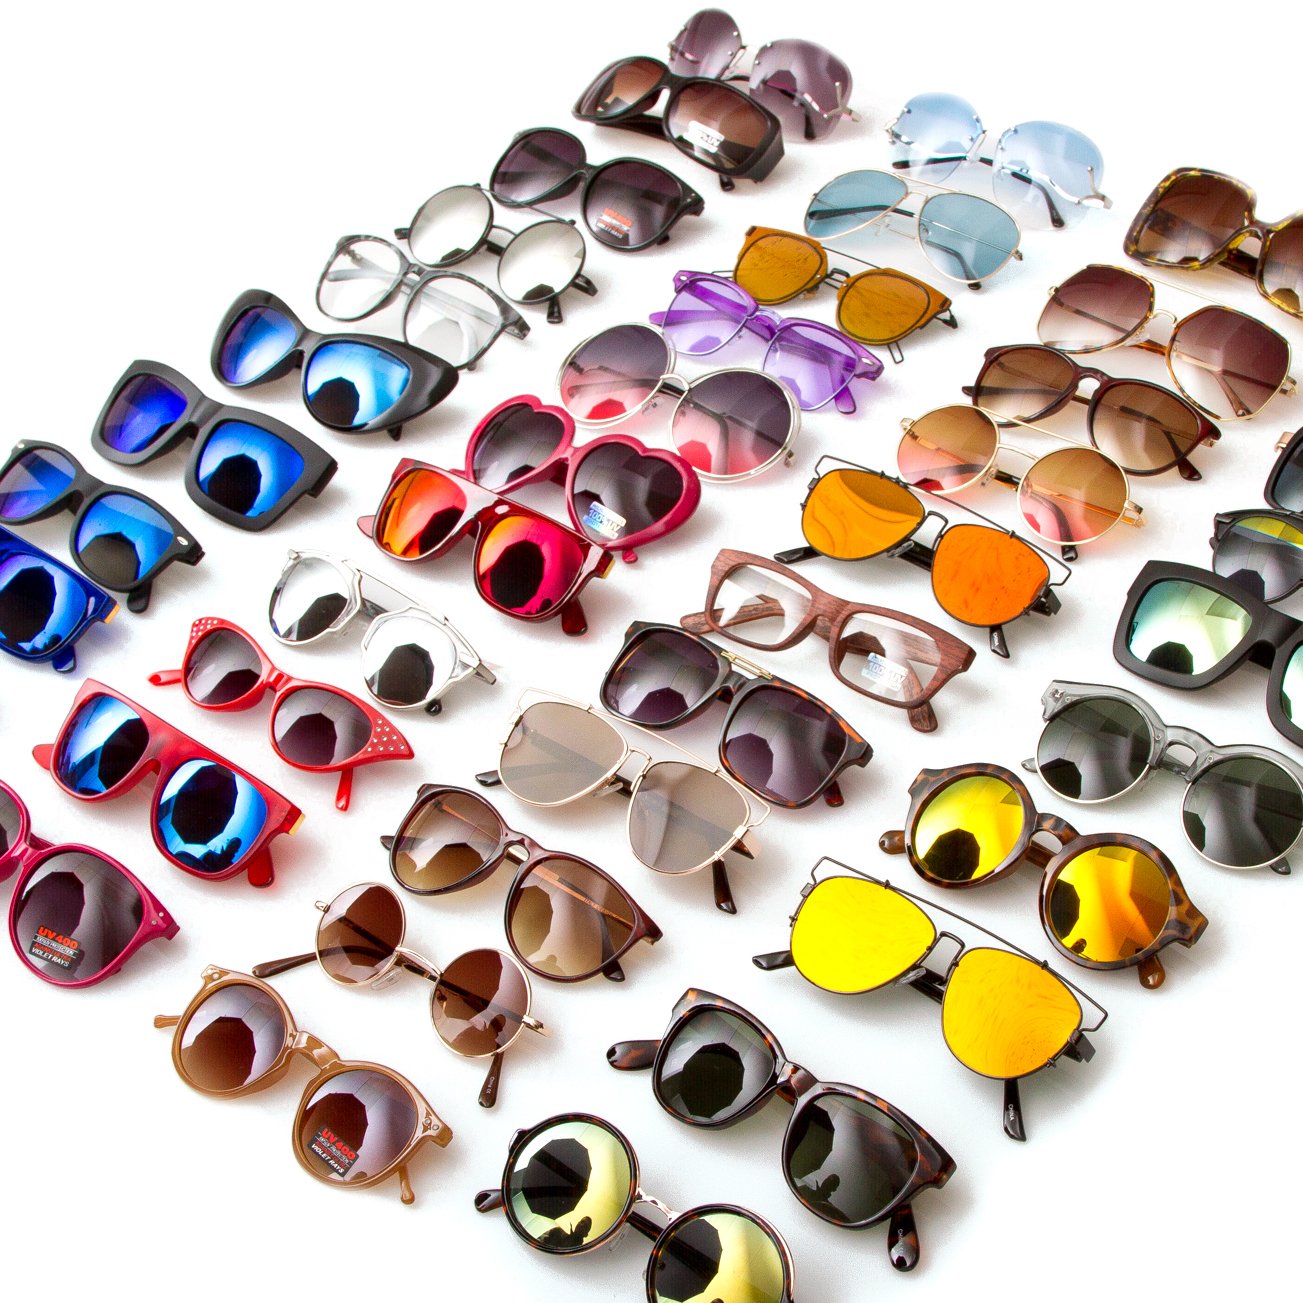 Wholesale Cheap Evidence Sunglasses - Buy in Bulk on